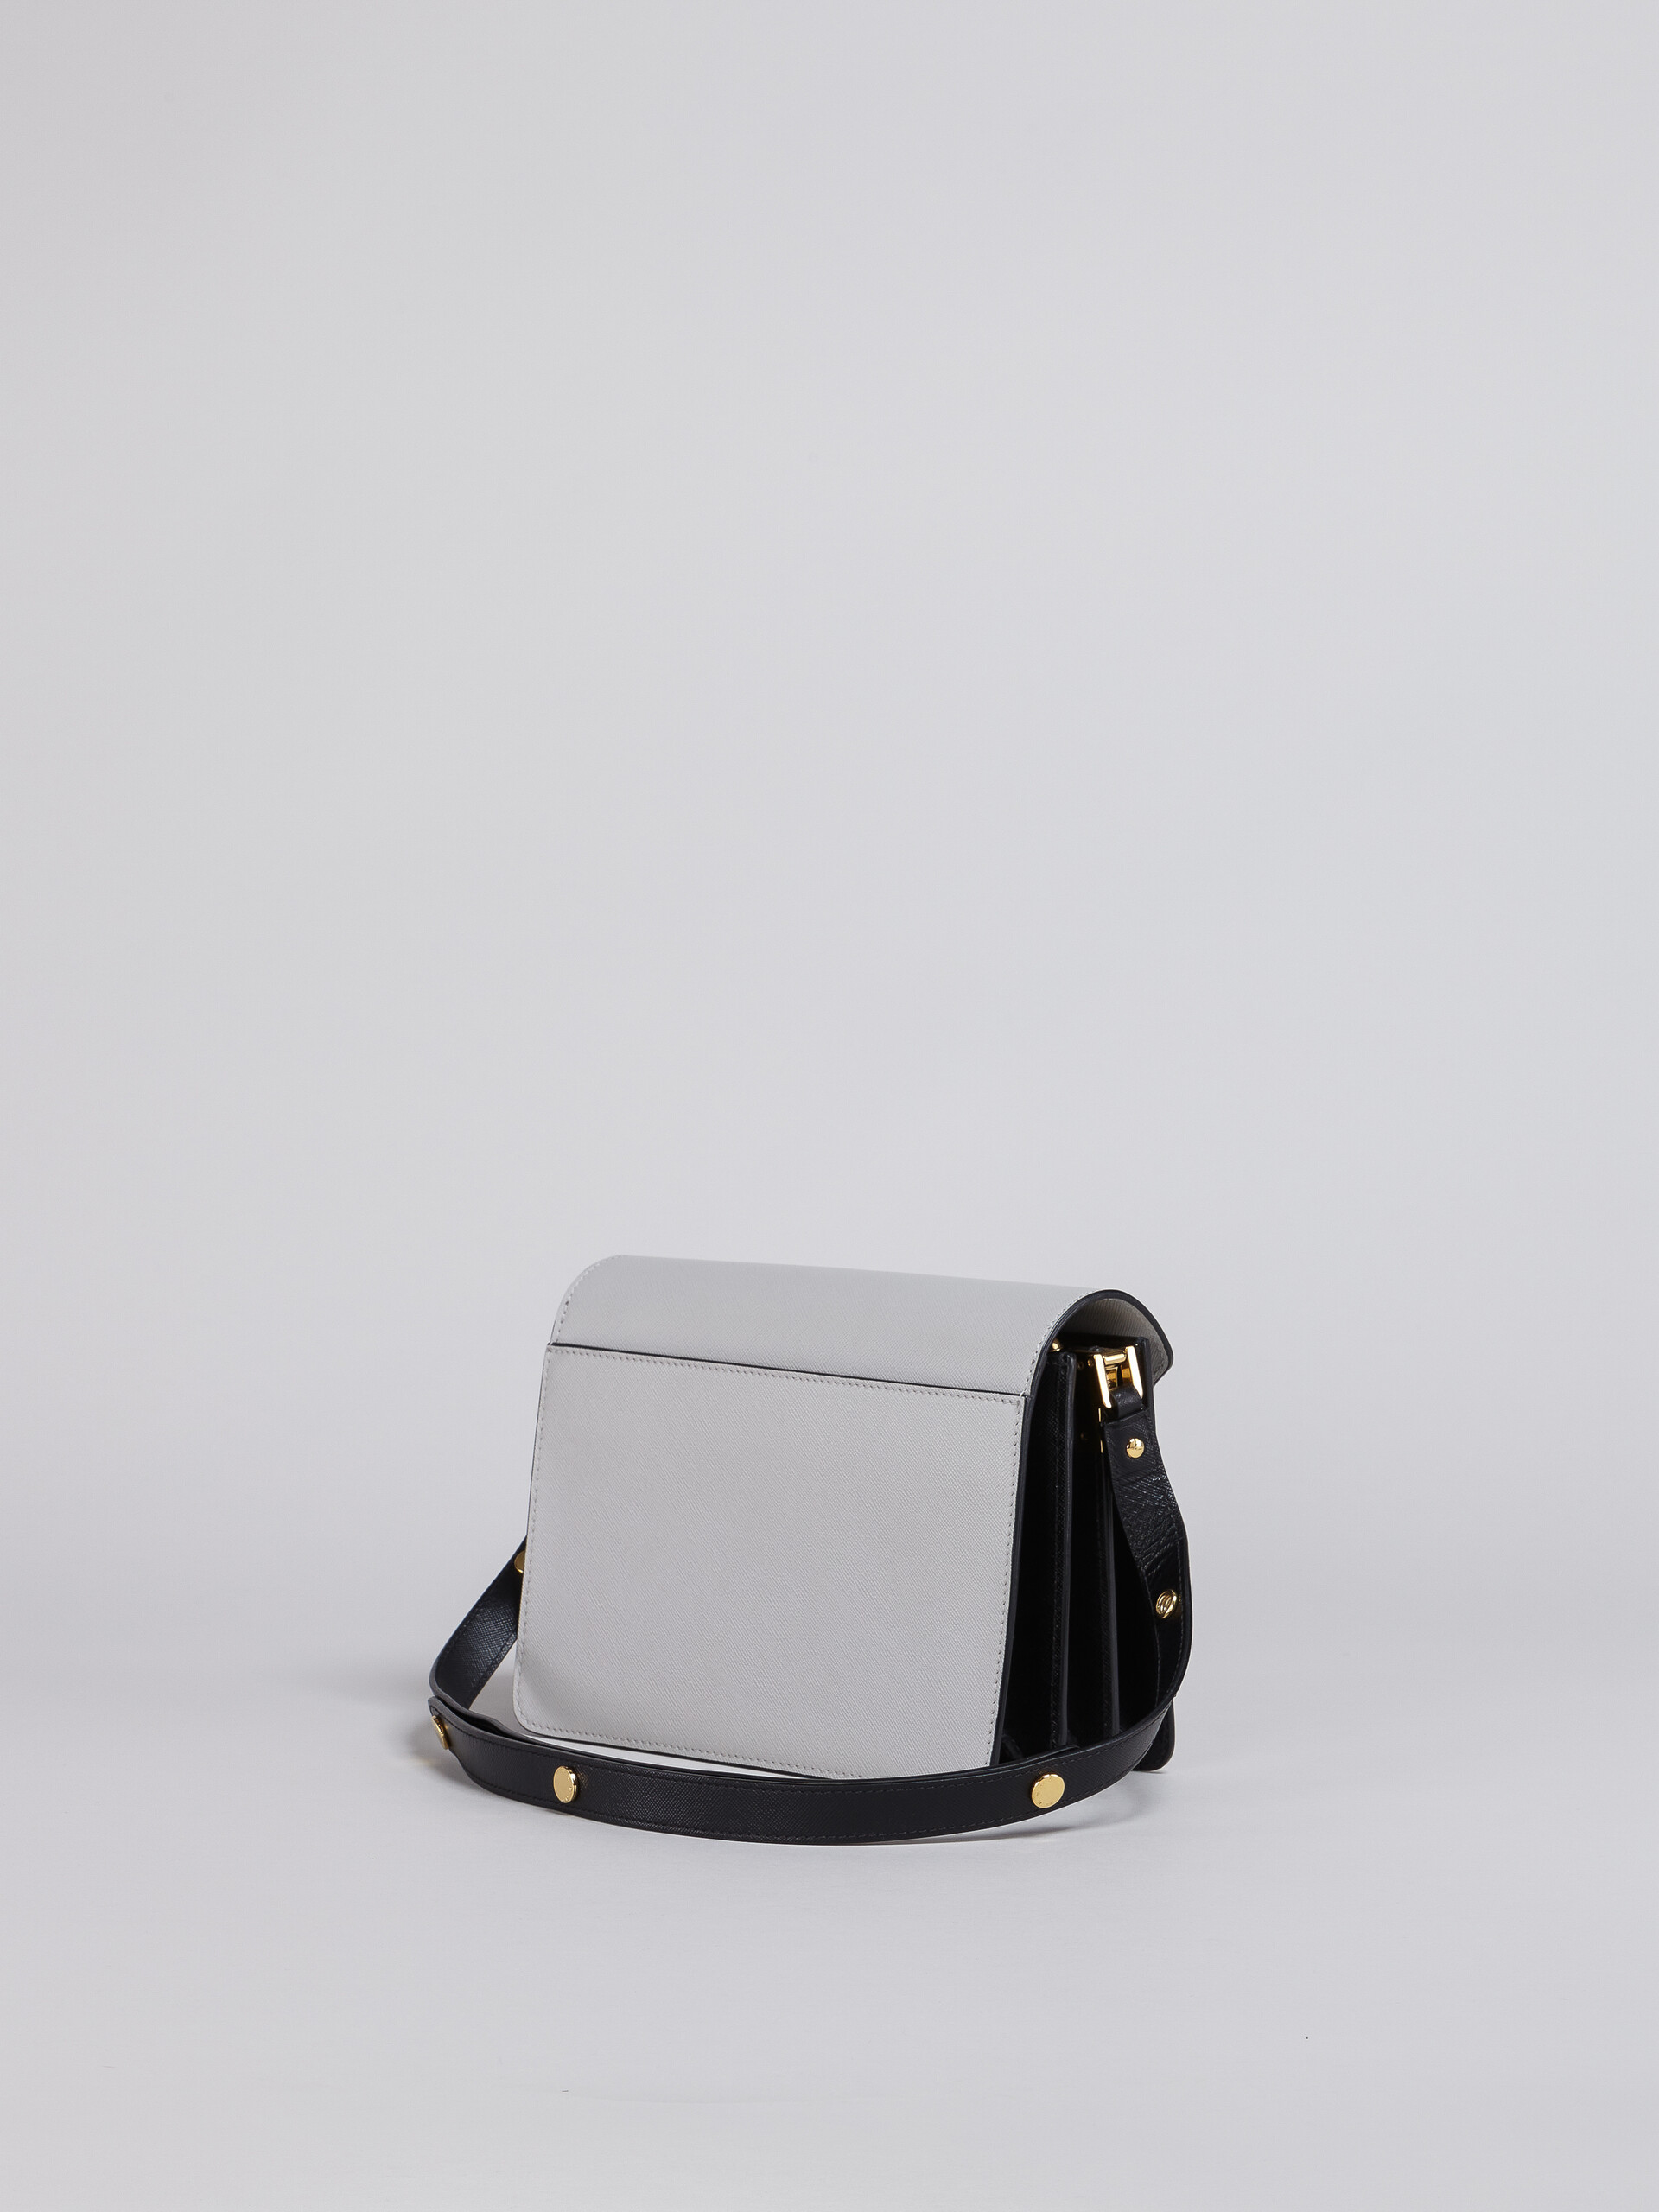 TRUNK medium bag in grey brown and black saffiano leather - Shoulder Bag - Image 2